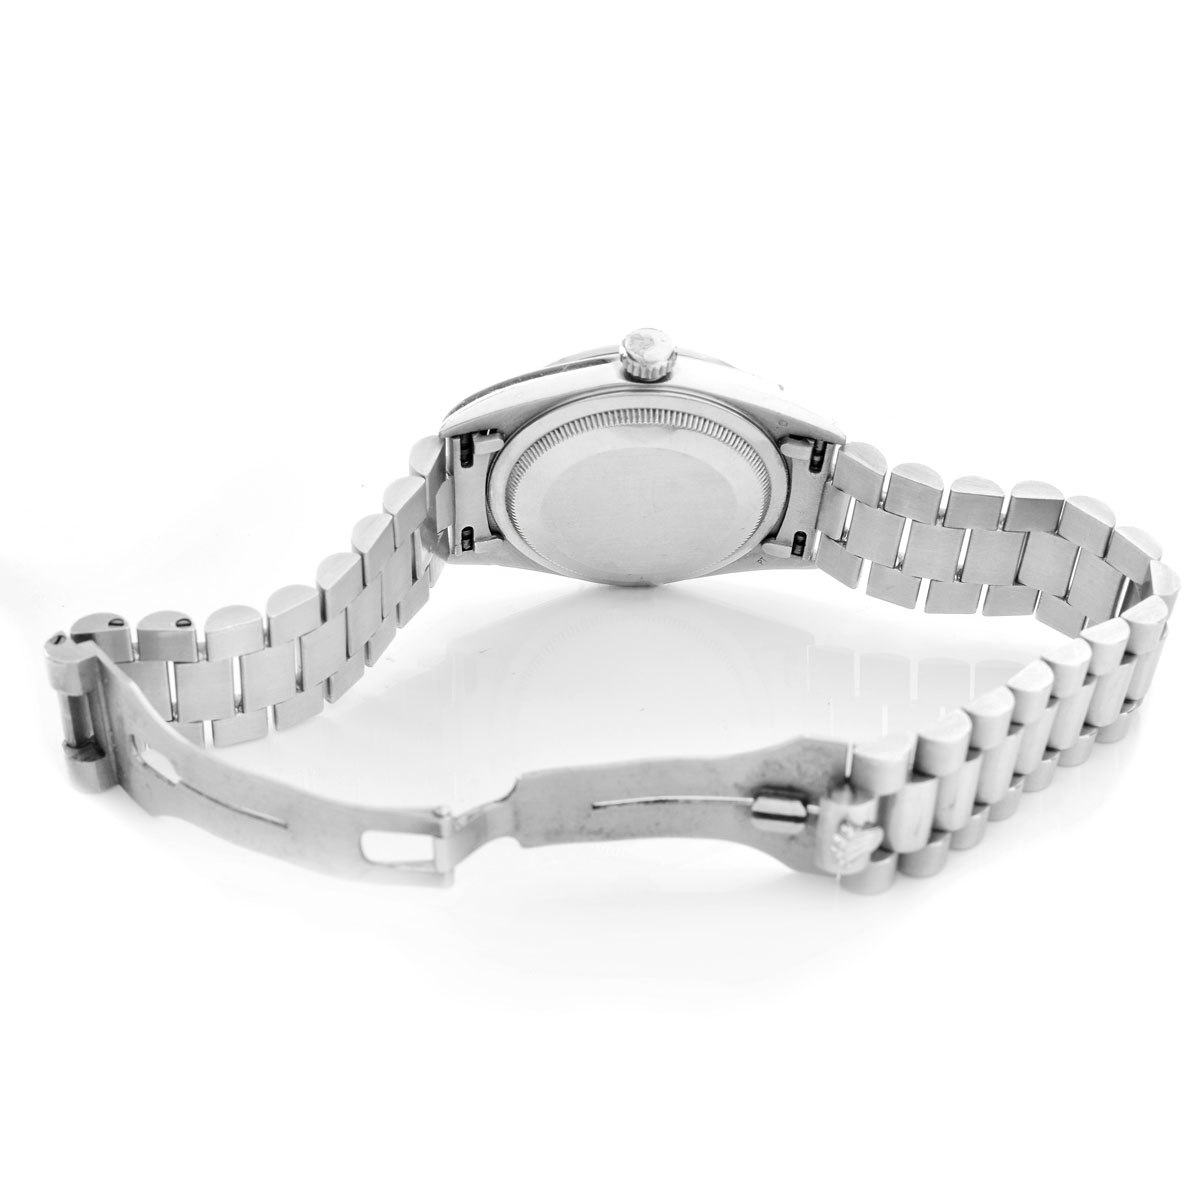 Man's Rolex Platinum President Day-Date Bracelet Watch 8385/6 Ref. 18206 with Box and Extra Bracelet Links.